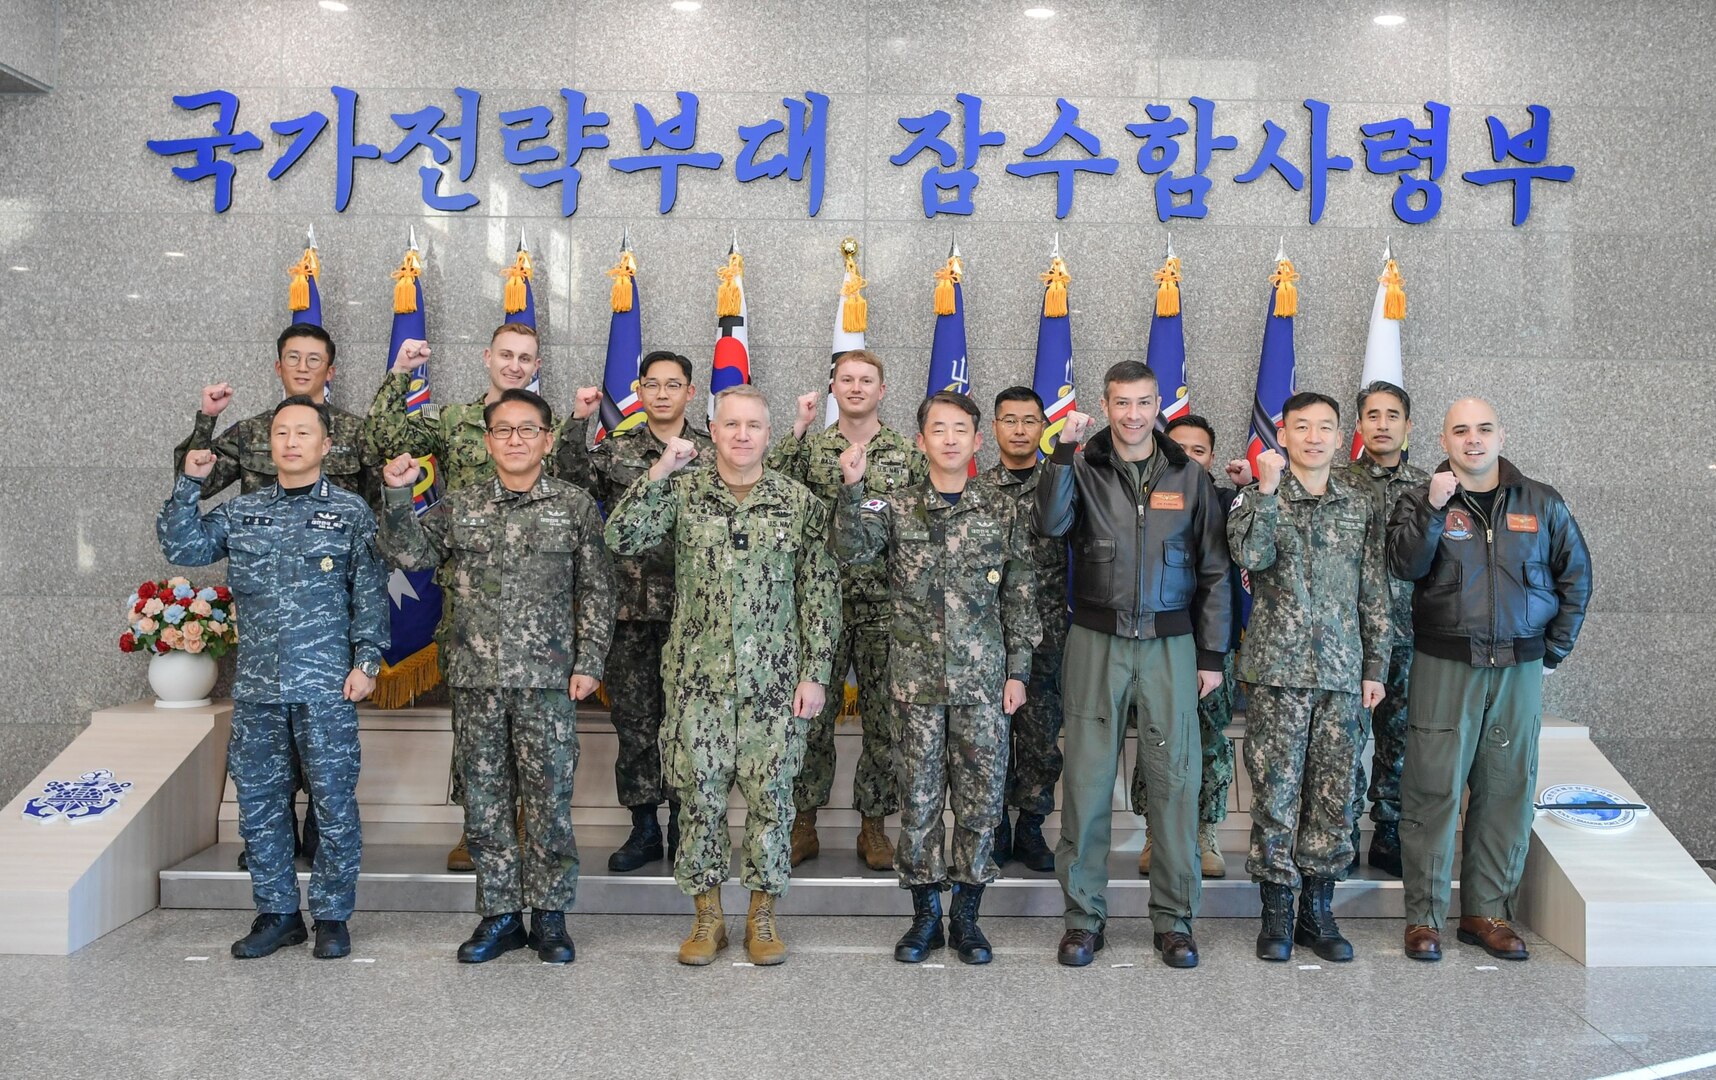 CTF 74 Visits Republic of Korea, Strengthening 70-Year Alliance